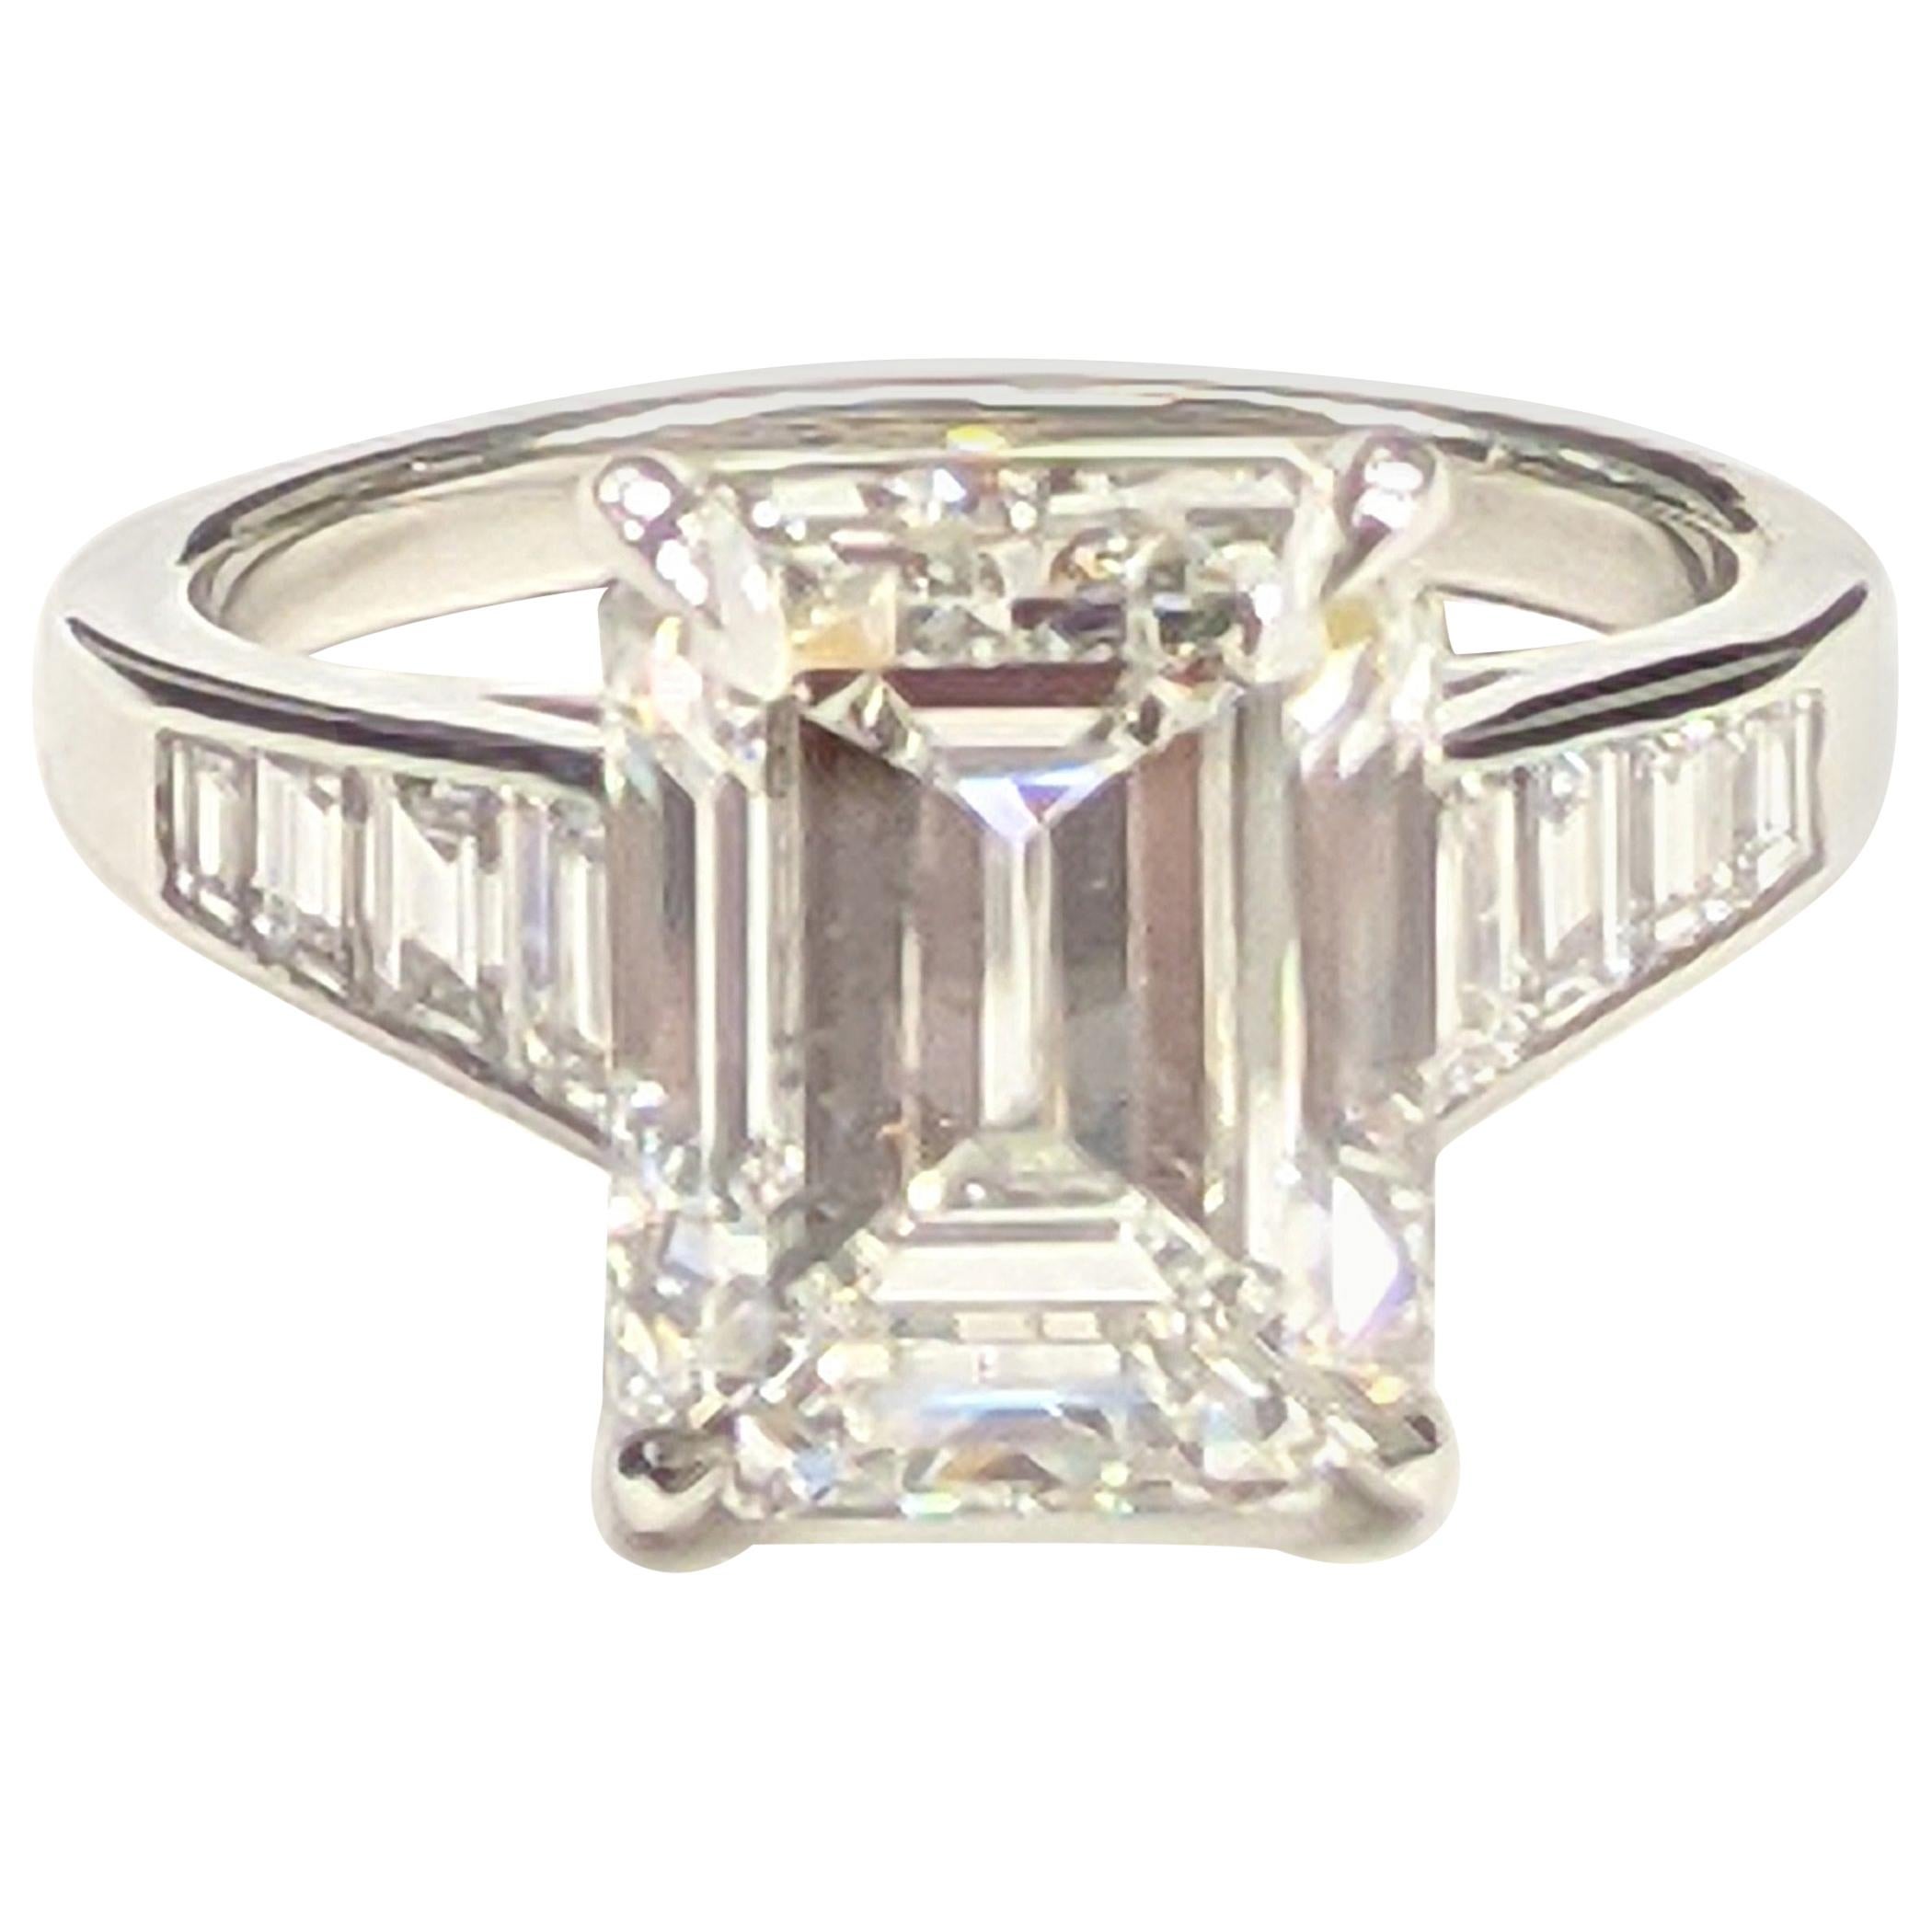 5 Ct. H VVS2 Emerald Cut GIA Certified Diamond Ring in Platinum